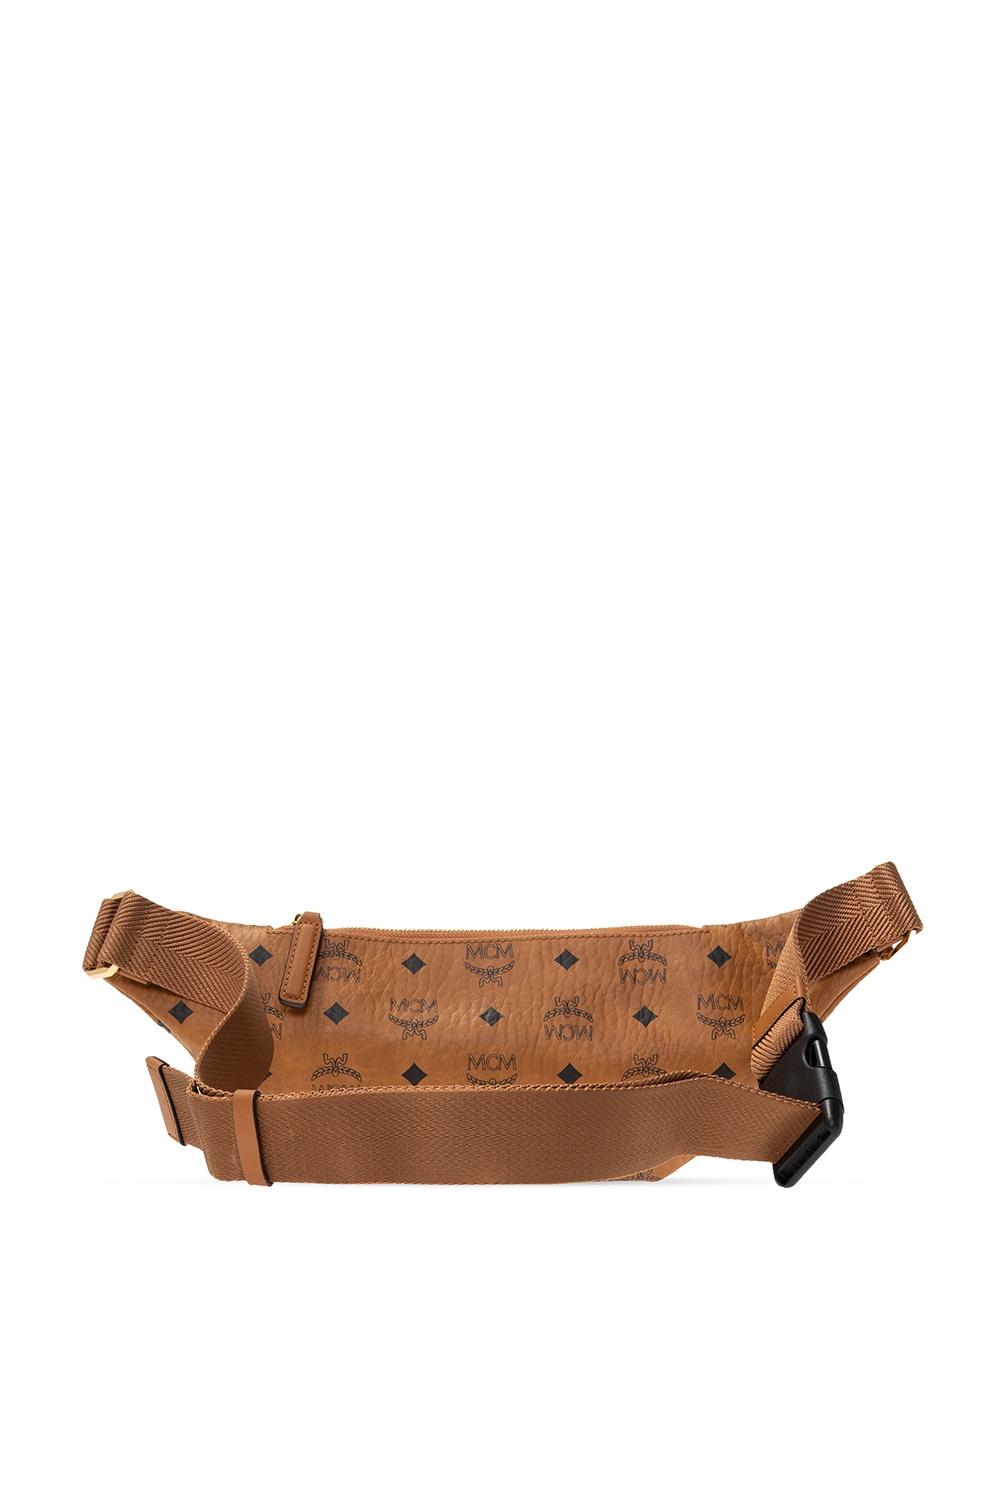 MCM Fursten Belt Bag / Louis Vuitton Bumbag Comparison/Medium MCM